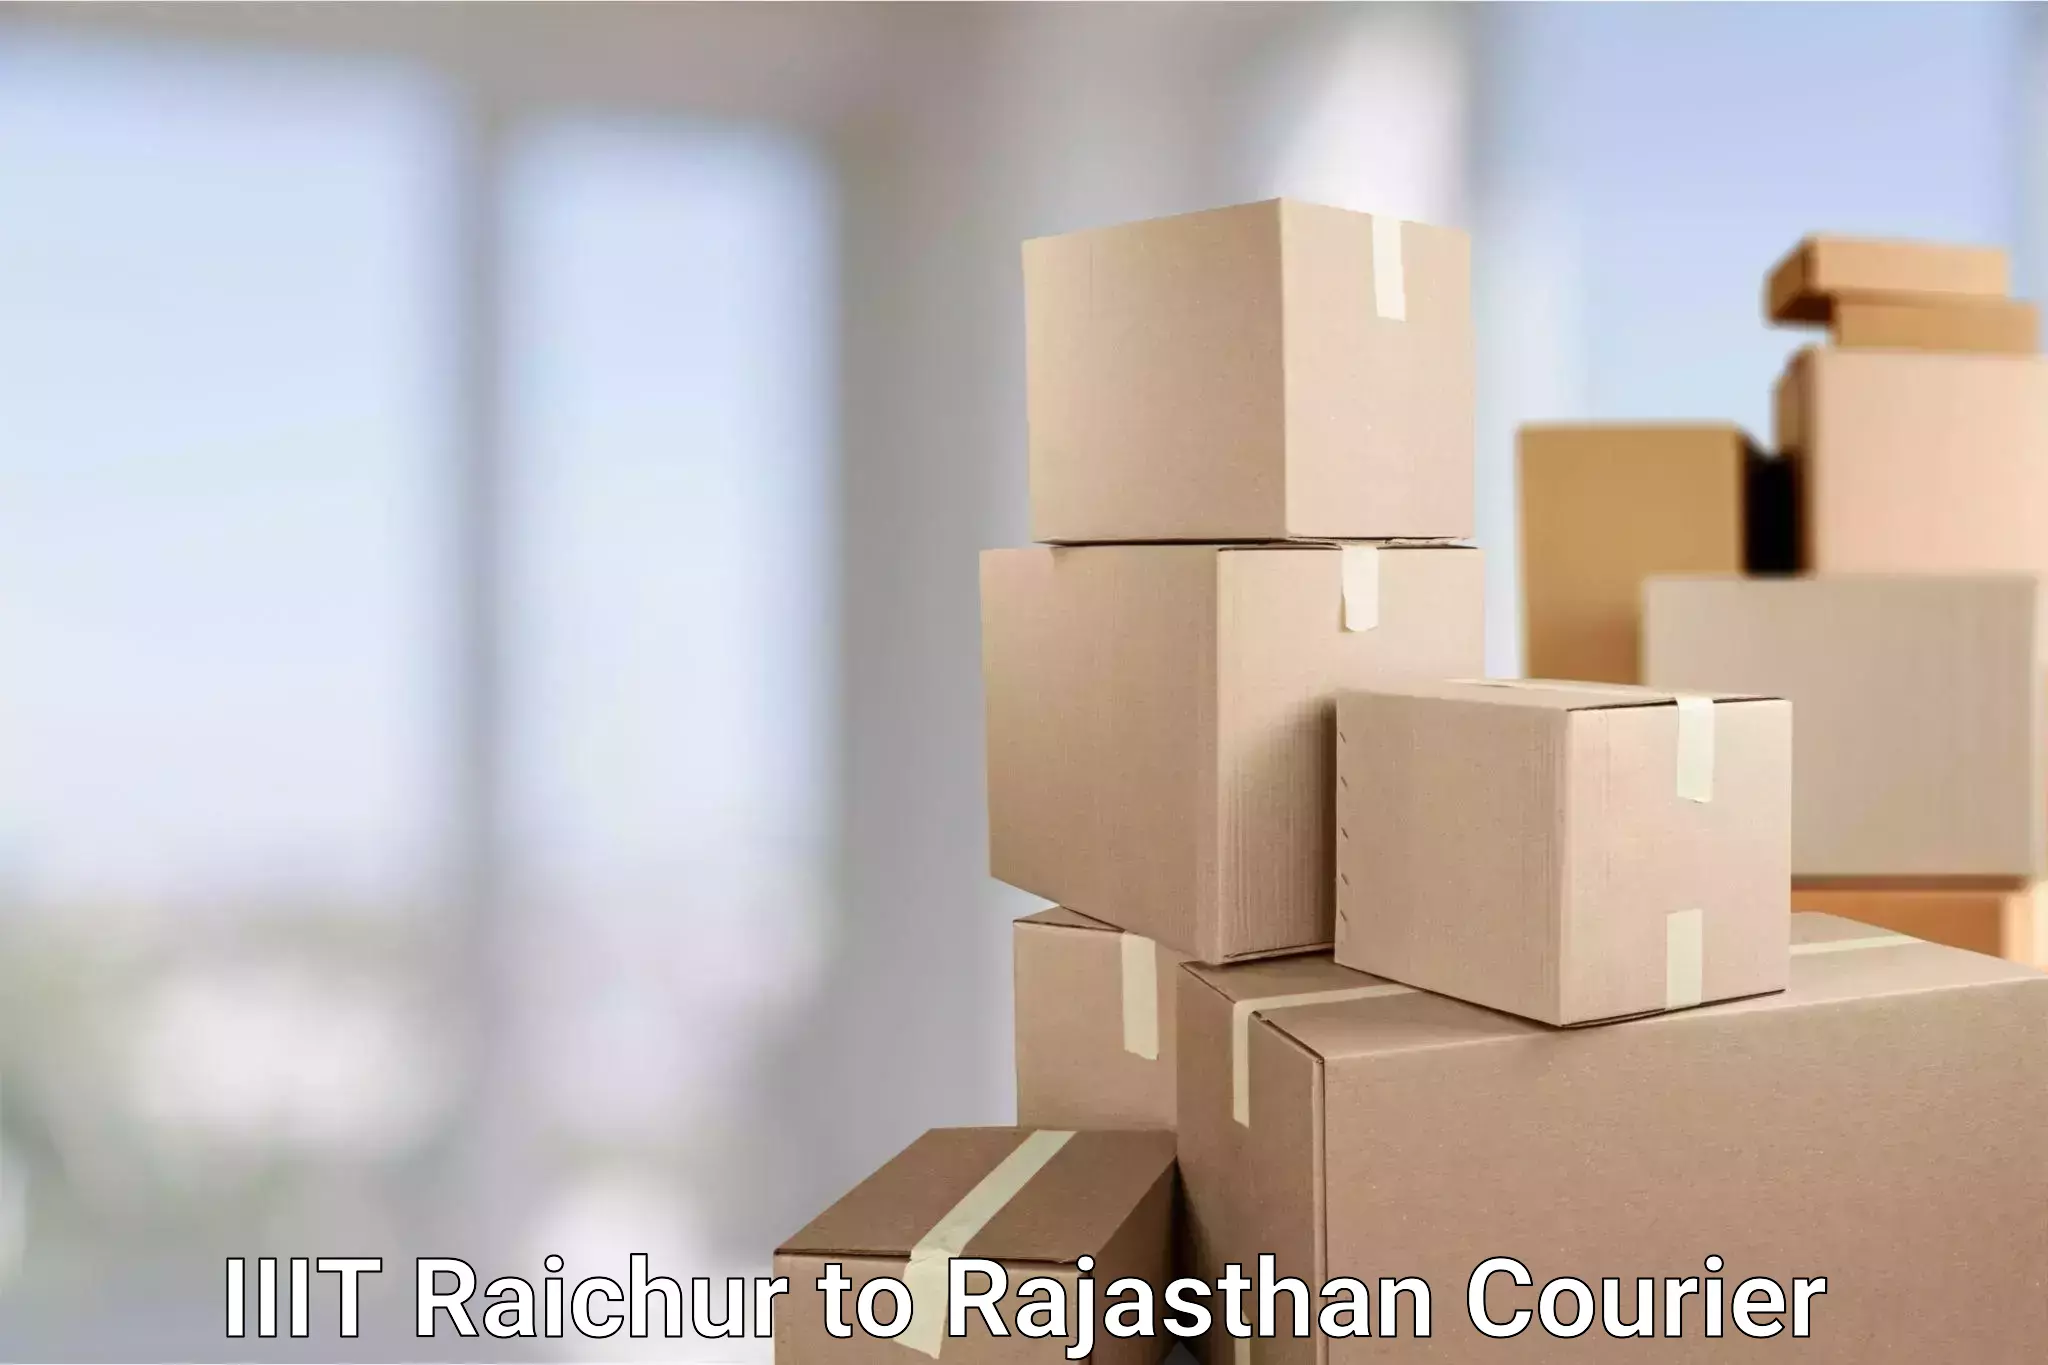 Efficient order fulfillment IIIT Raichur to Rajasthan